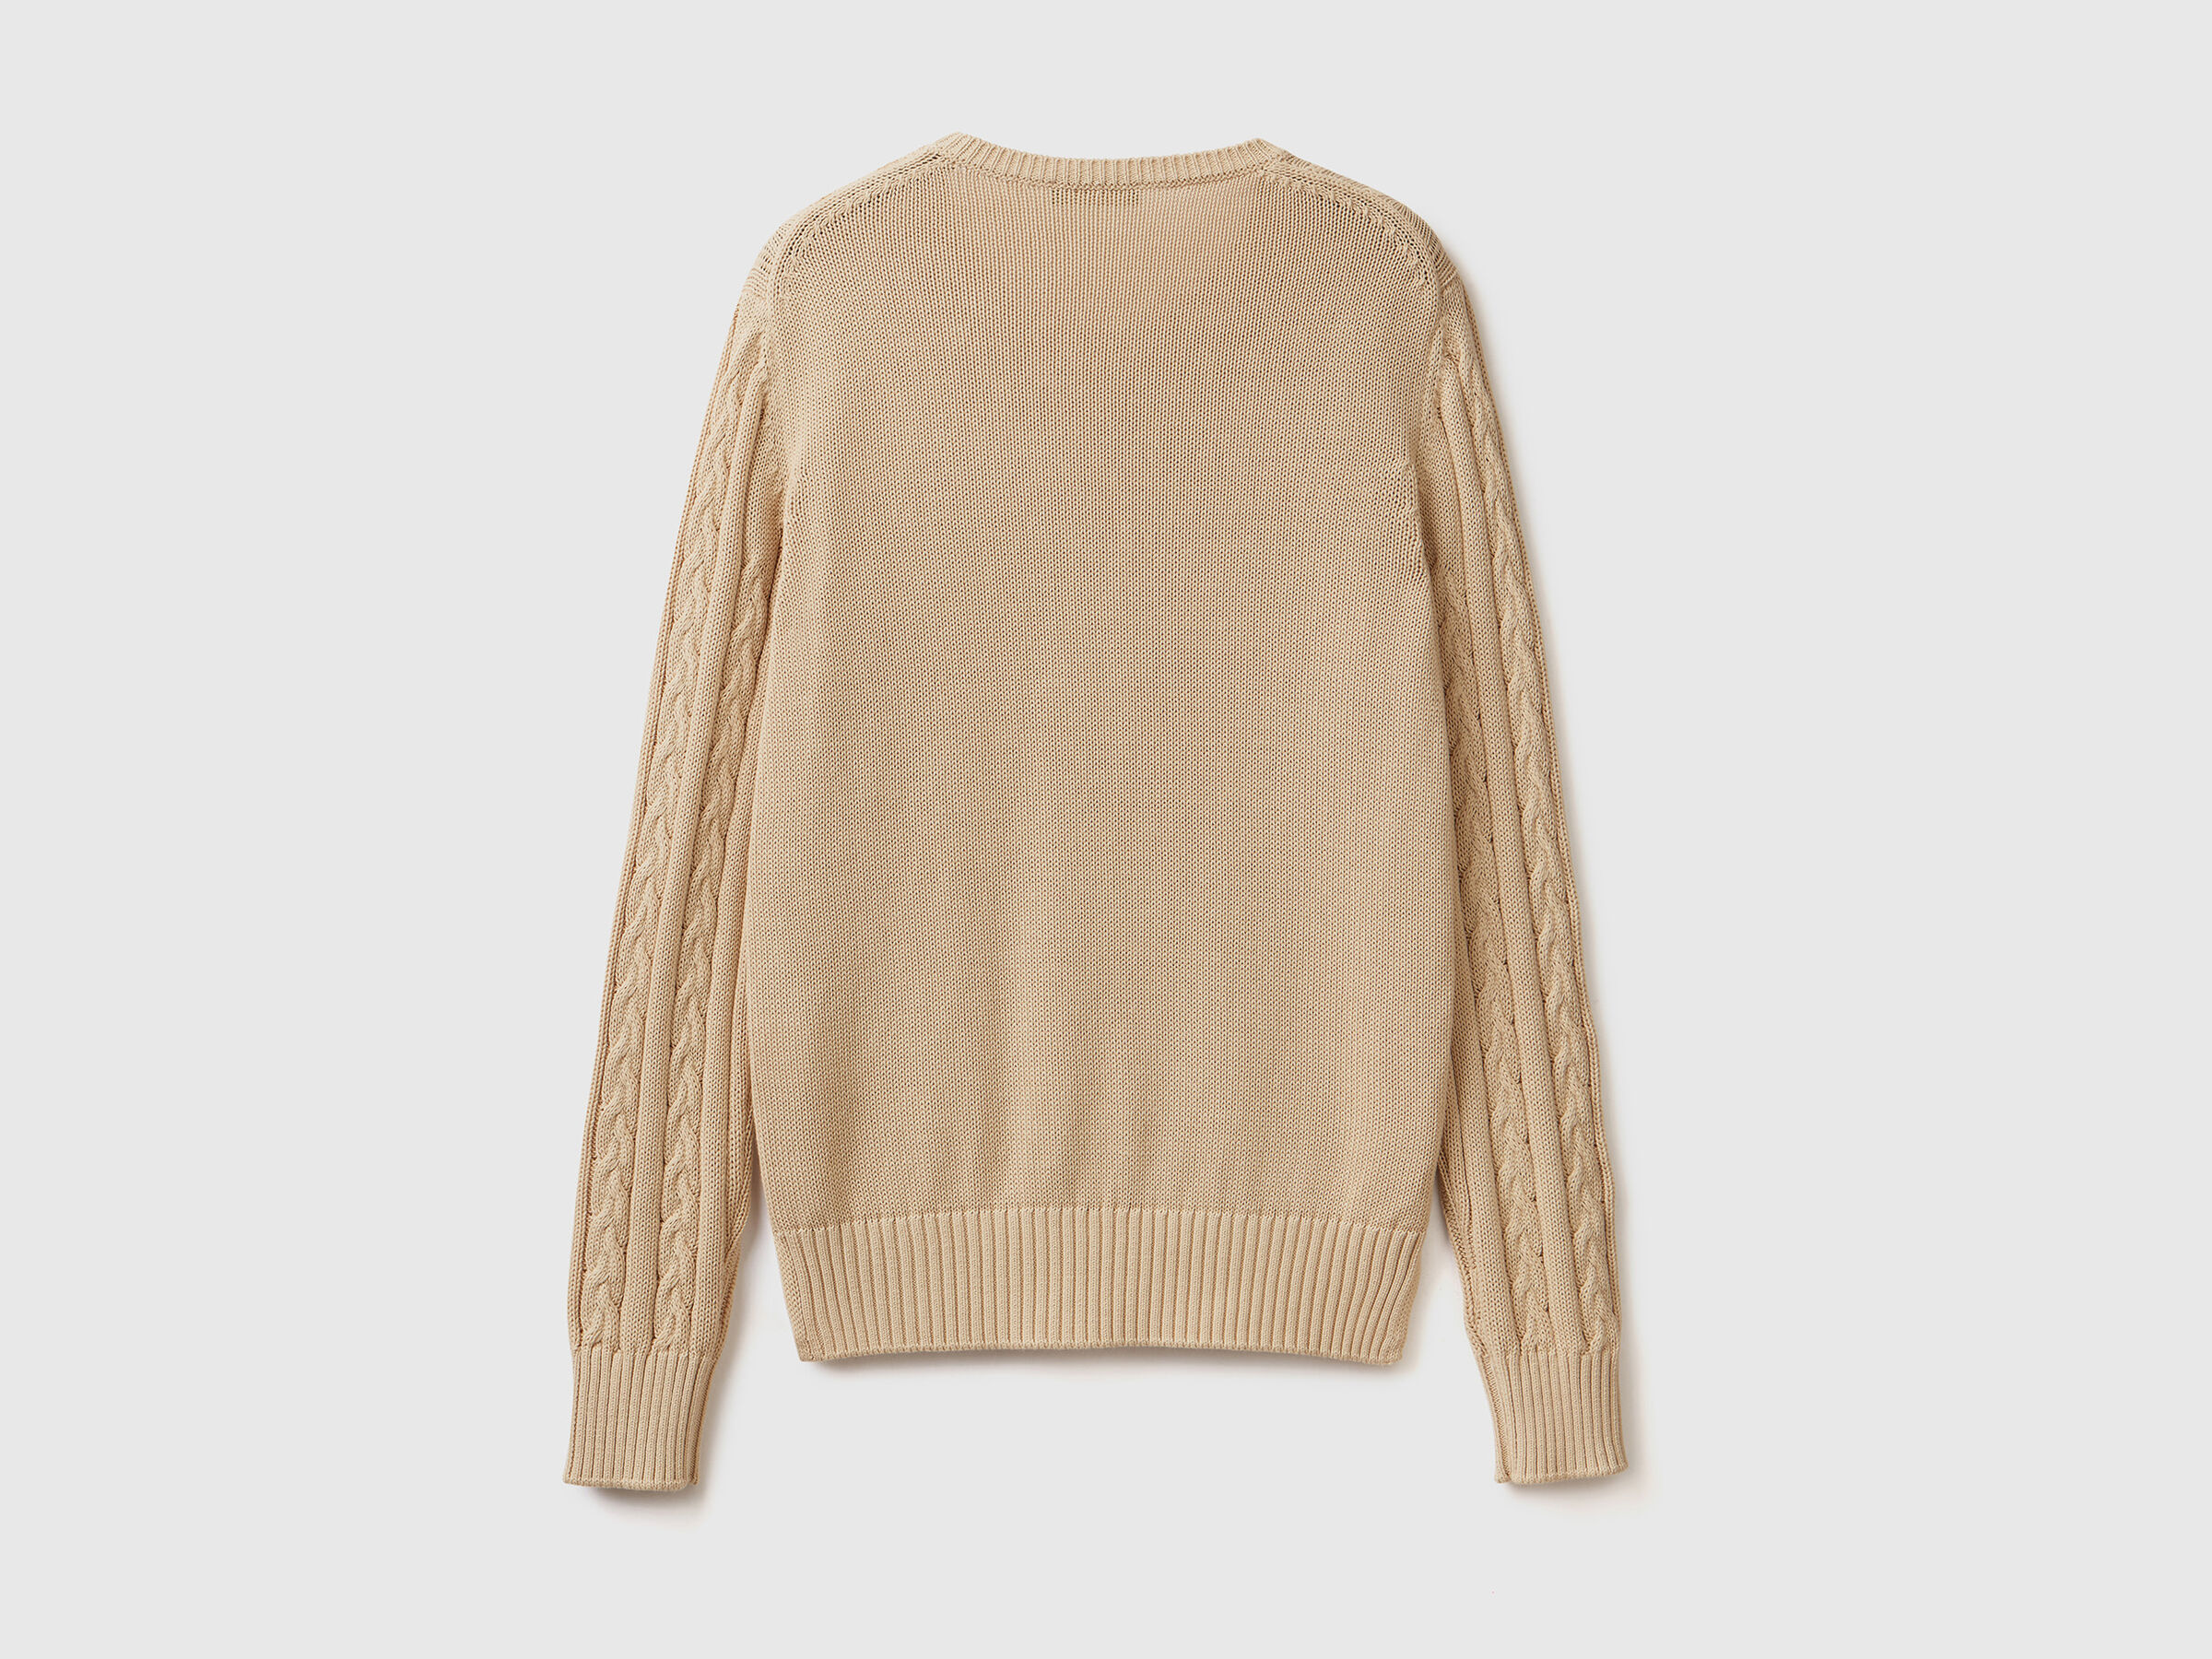 Afleiden sector Wrak Cable knit sweater 100% cotton - Beige | Benetton